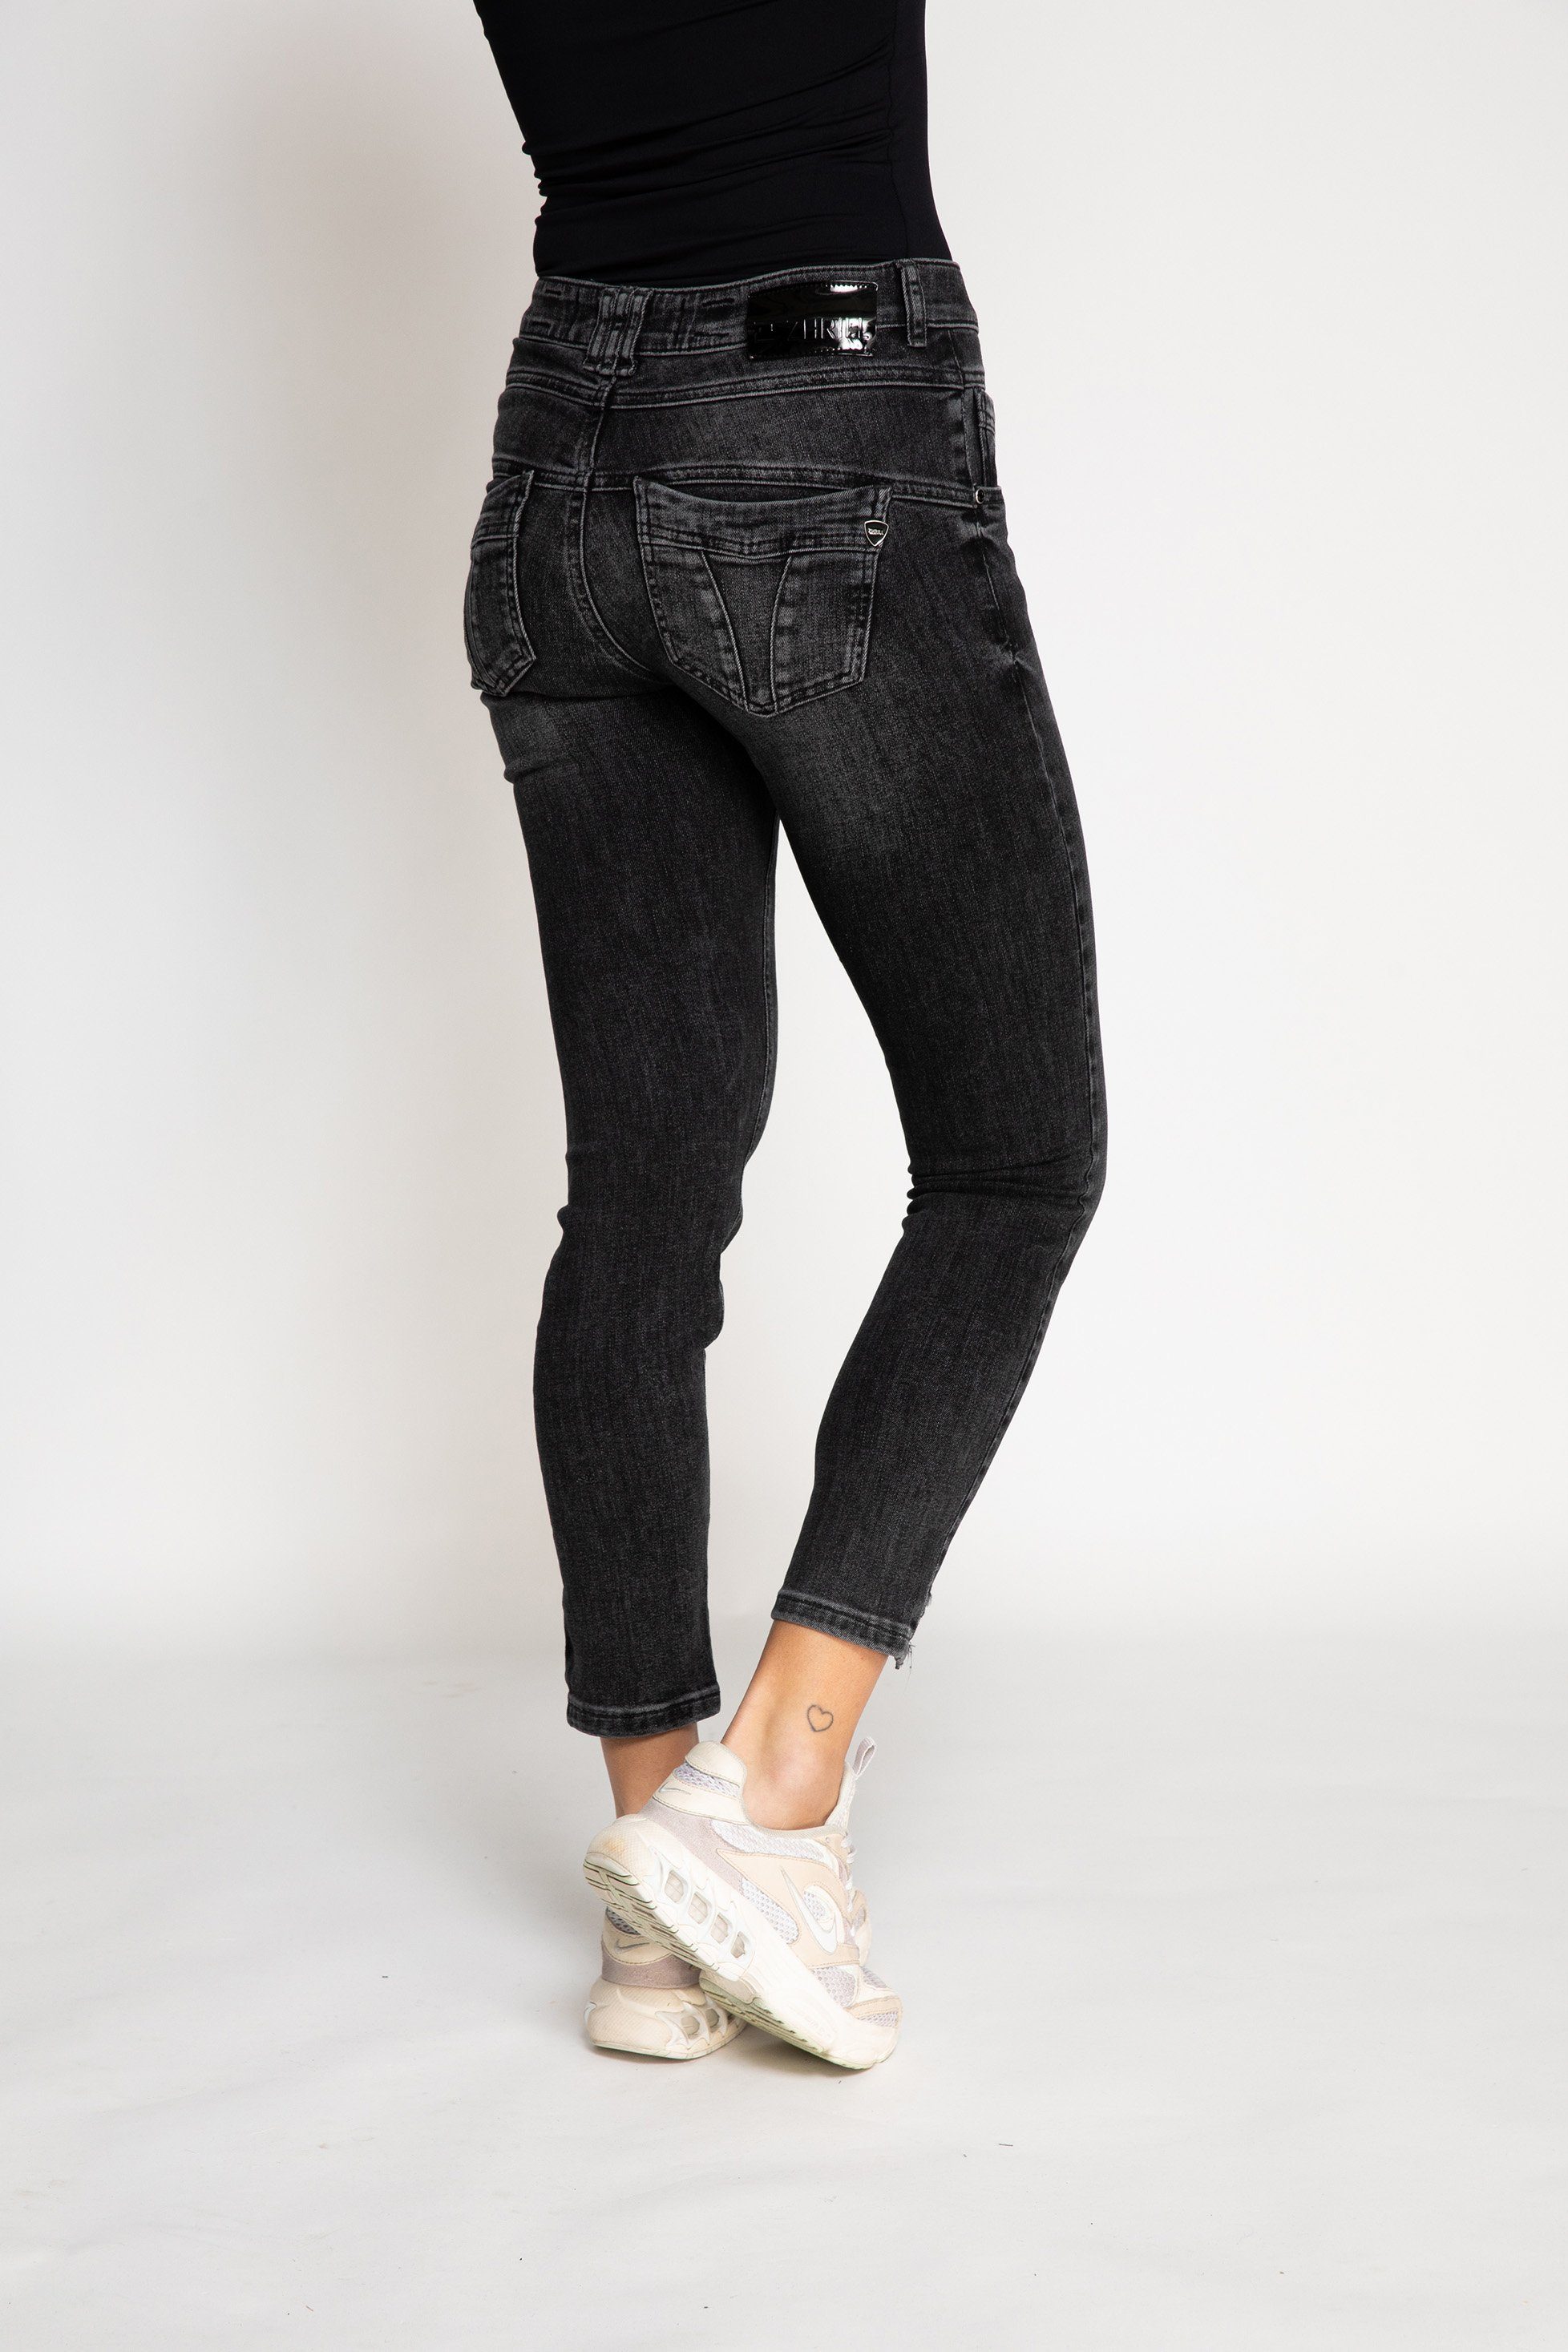 Zhrill Skinny-fit-Jeans Skinny Jeans KELA Black angenehmer Sitzkomfort